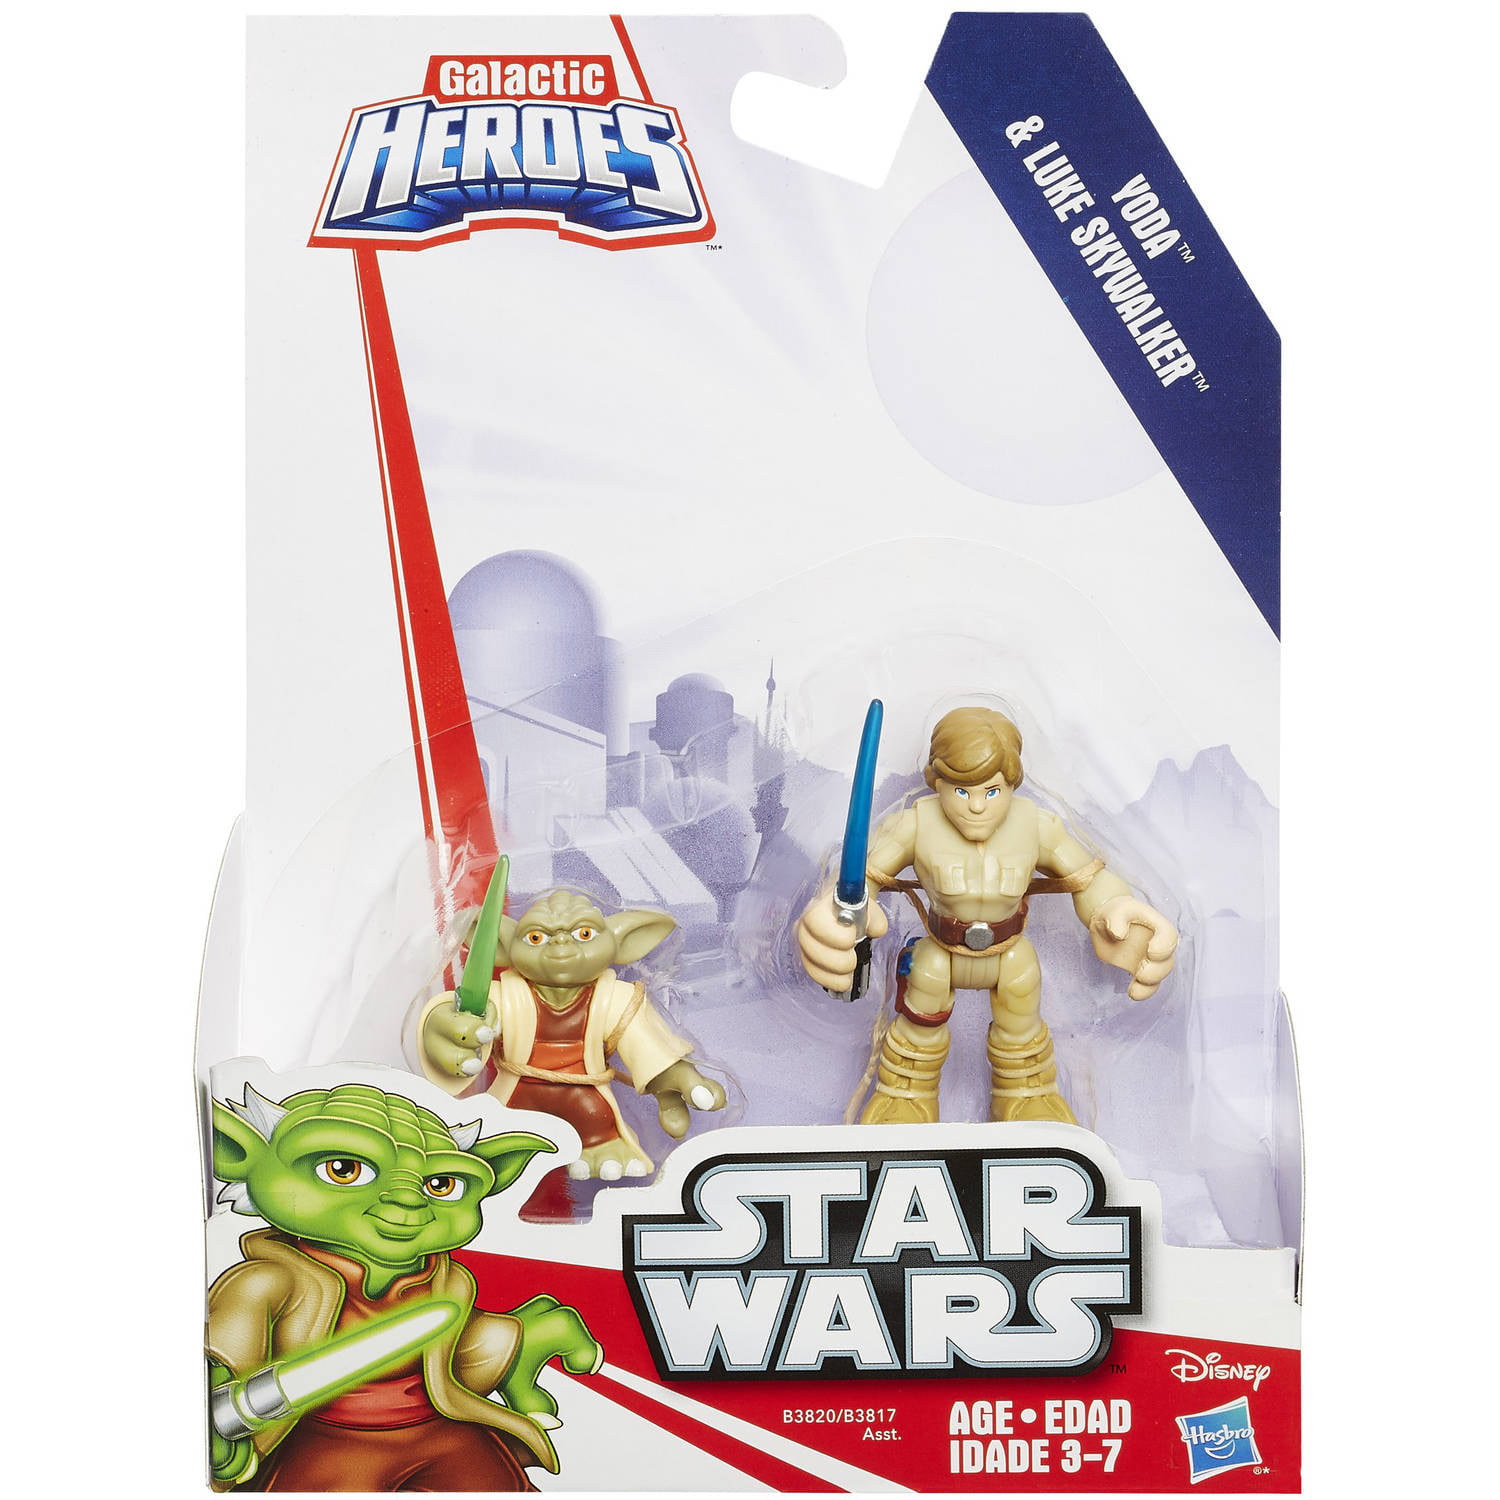 random 10x Playskool Star Wars Galactic Heroes Yoda Stormtrooper GREEDO figures 